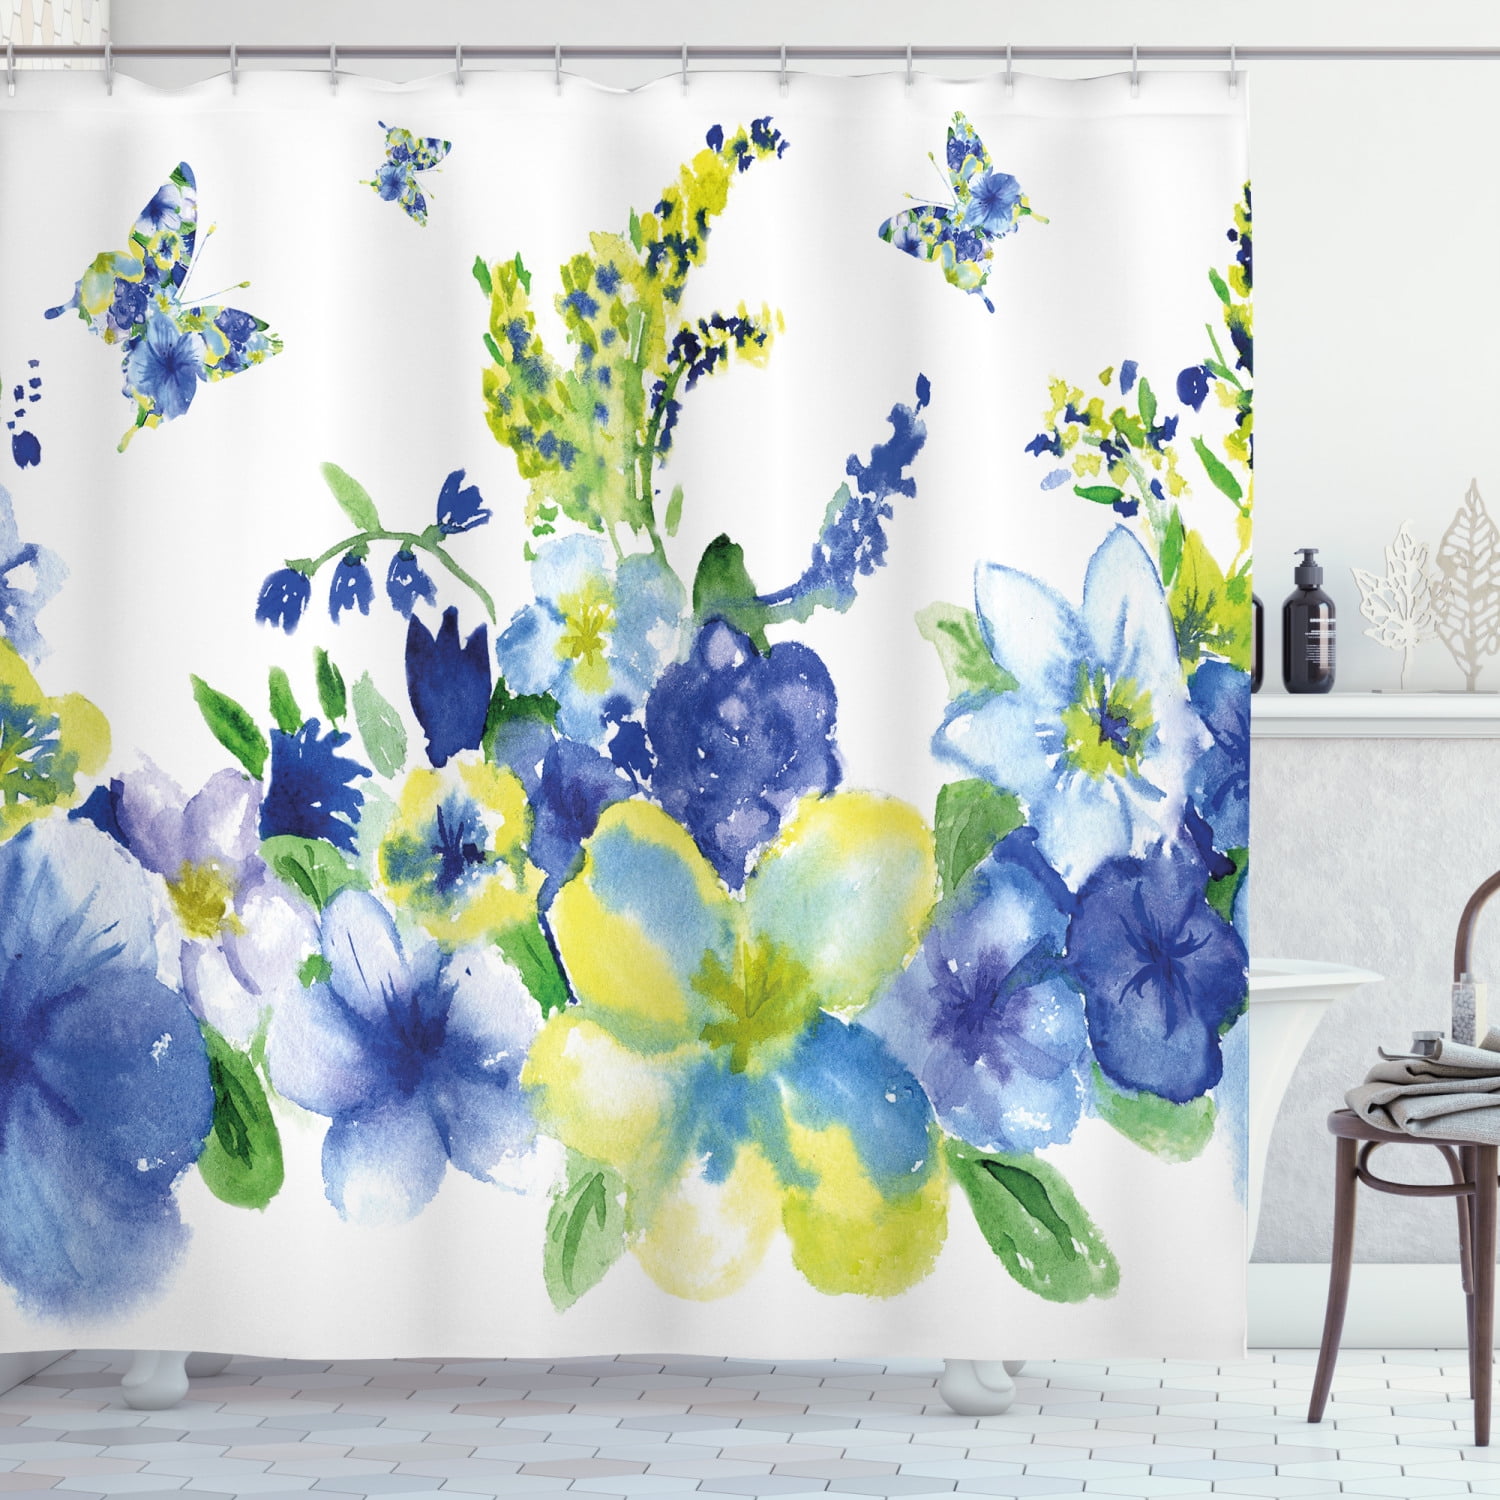 Hooks Water Resistant Duck Print Bathroom Shower Sheer Curtain Panel Decor 